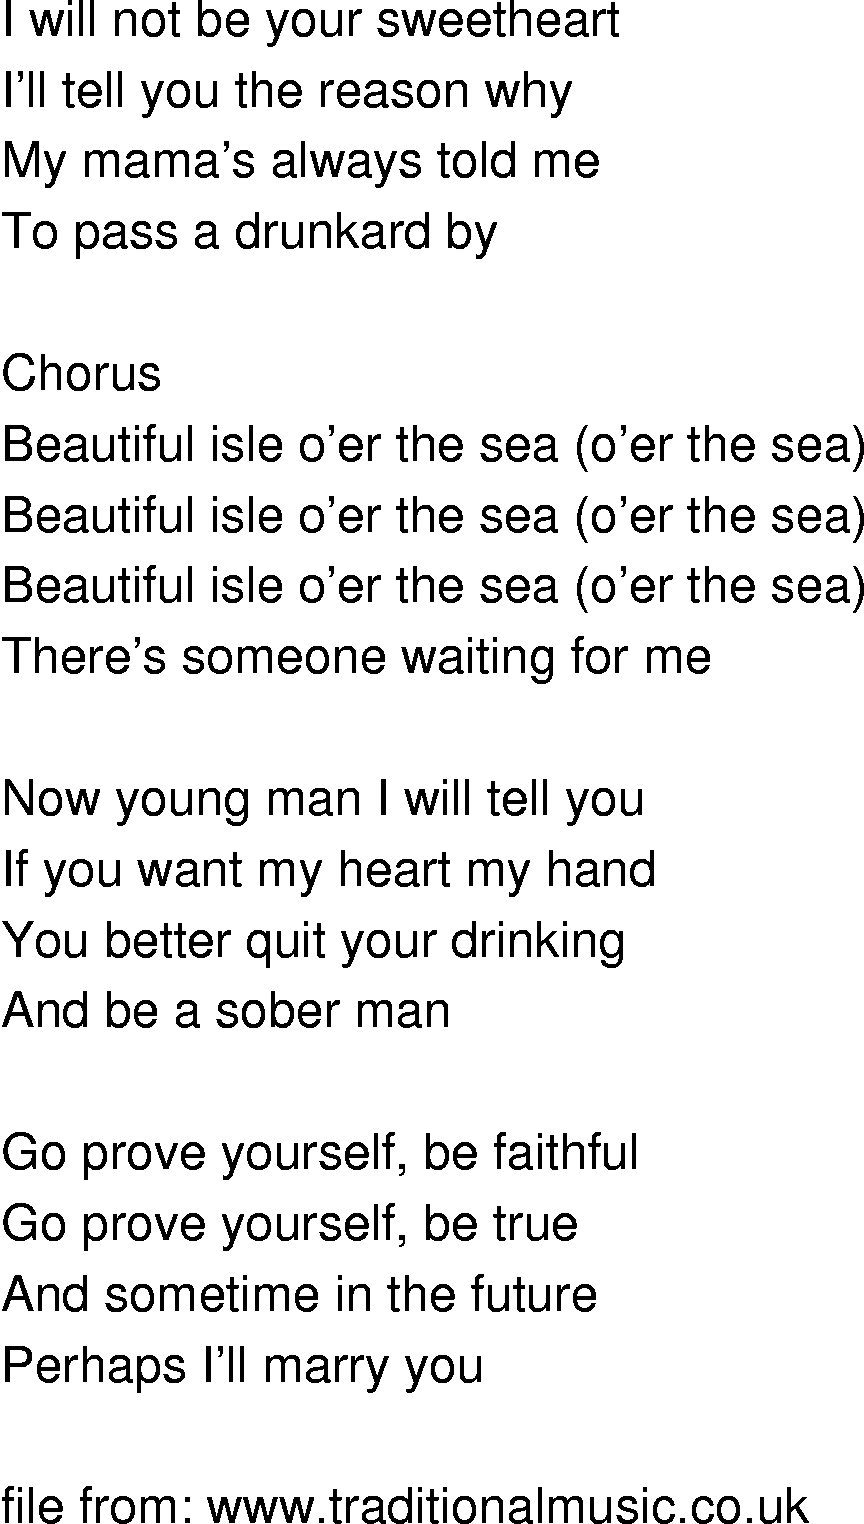 Old-Time (oldtimey) Song Lyrics - beautiful isle oer the sea